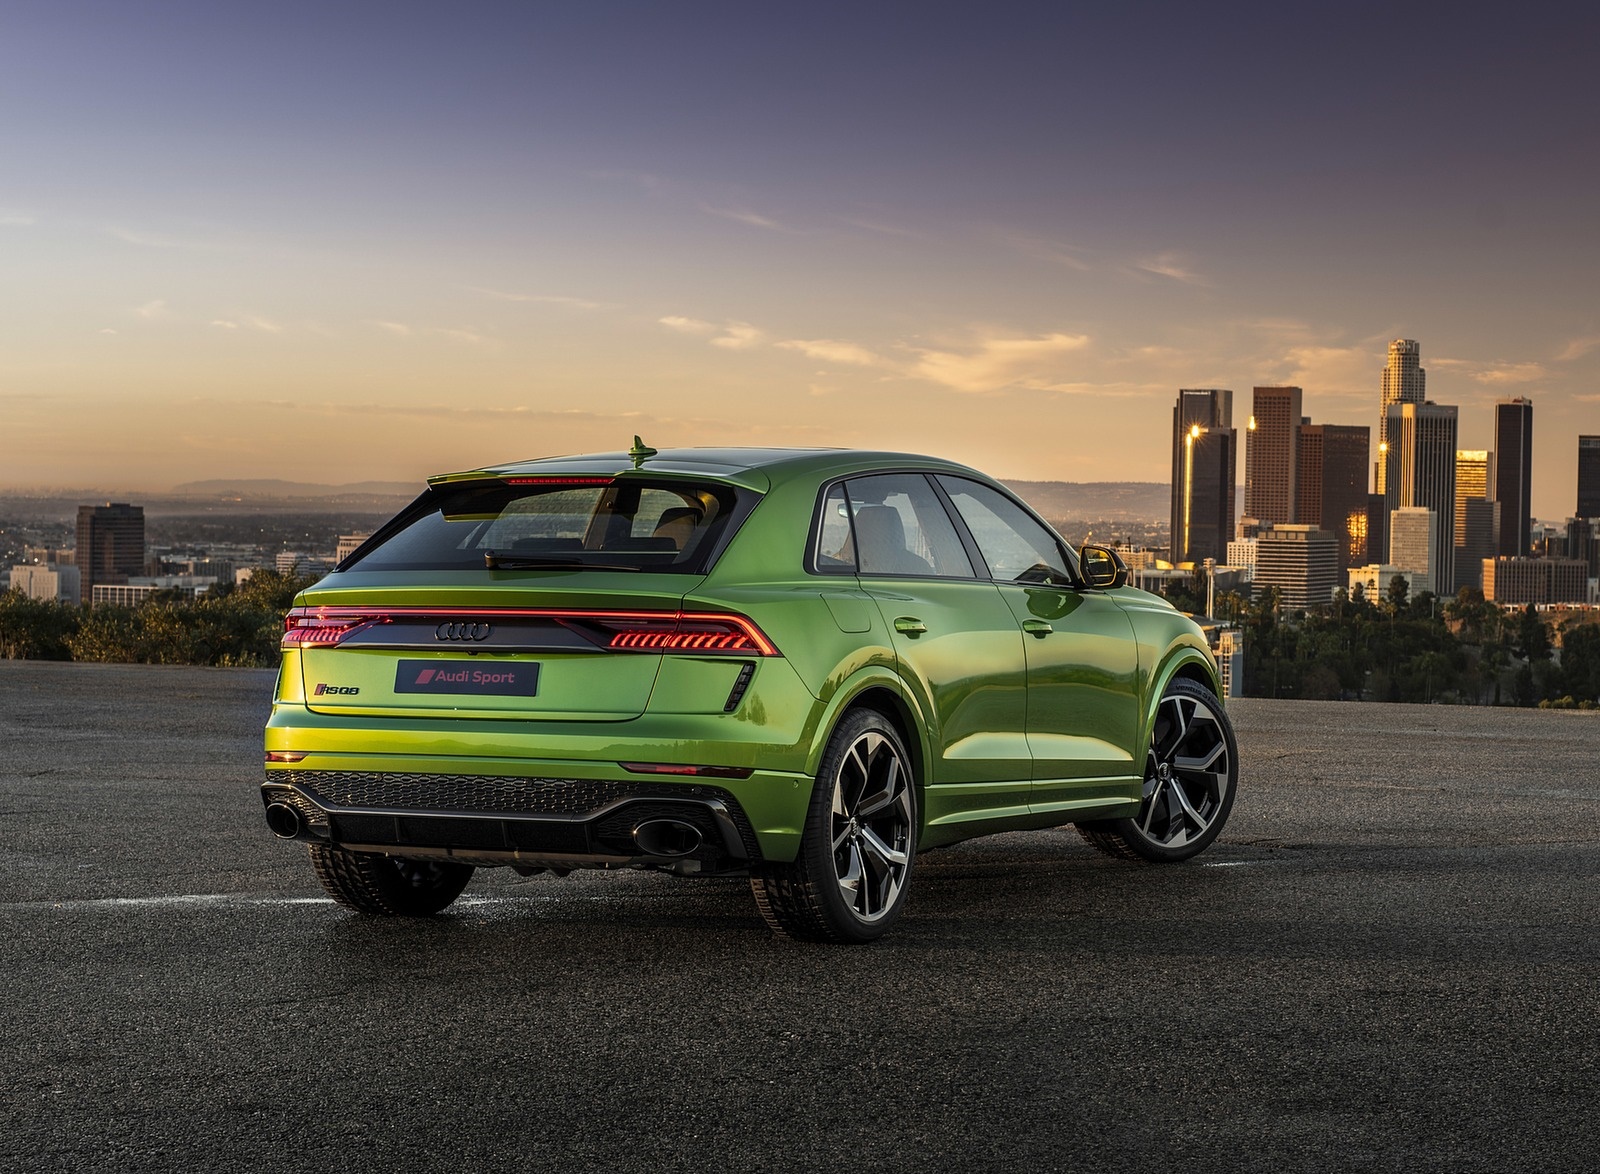 2020 Audi RS Q8 (Color: Java Green) Rear Three-Quarter Wallpapers #33 of 196